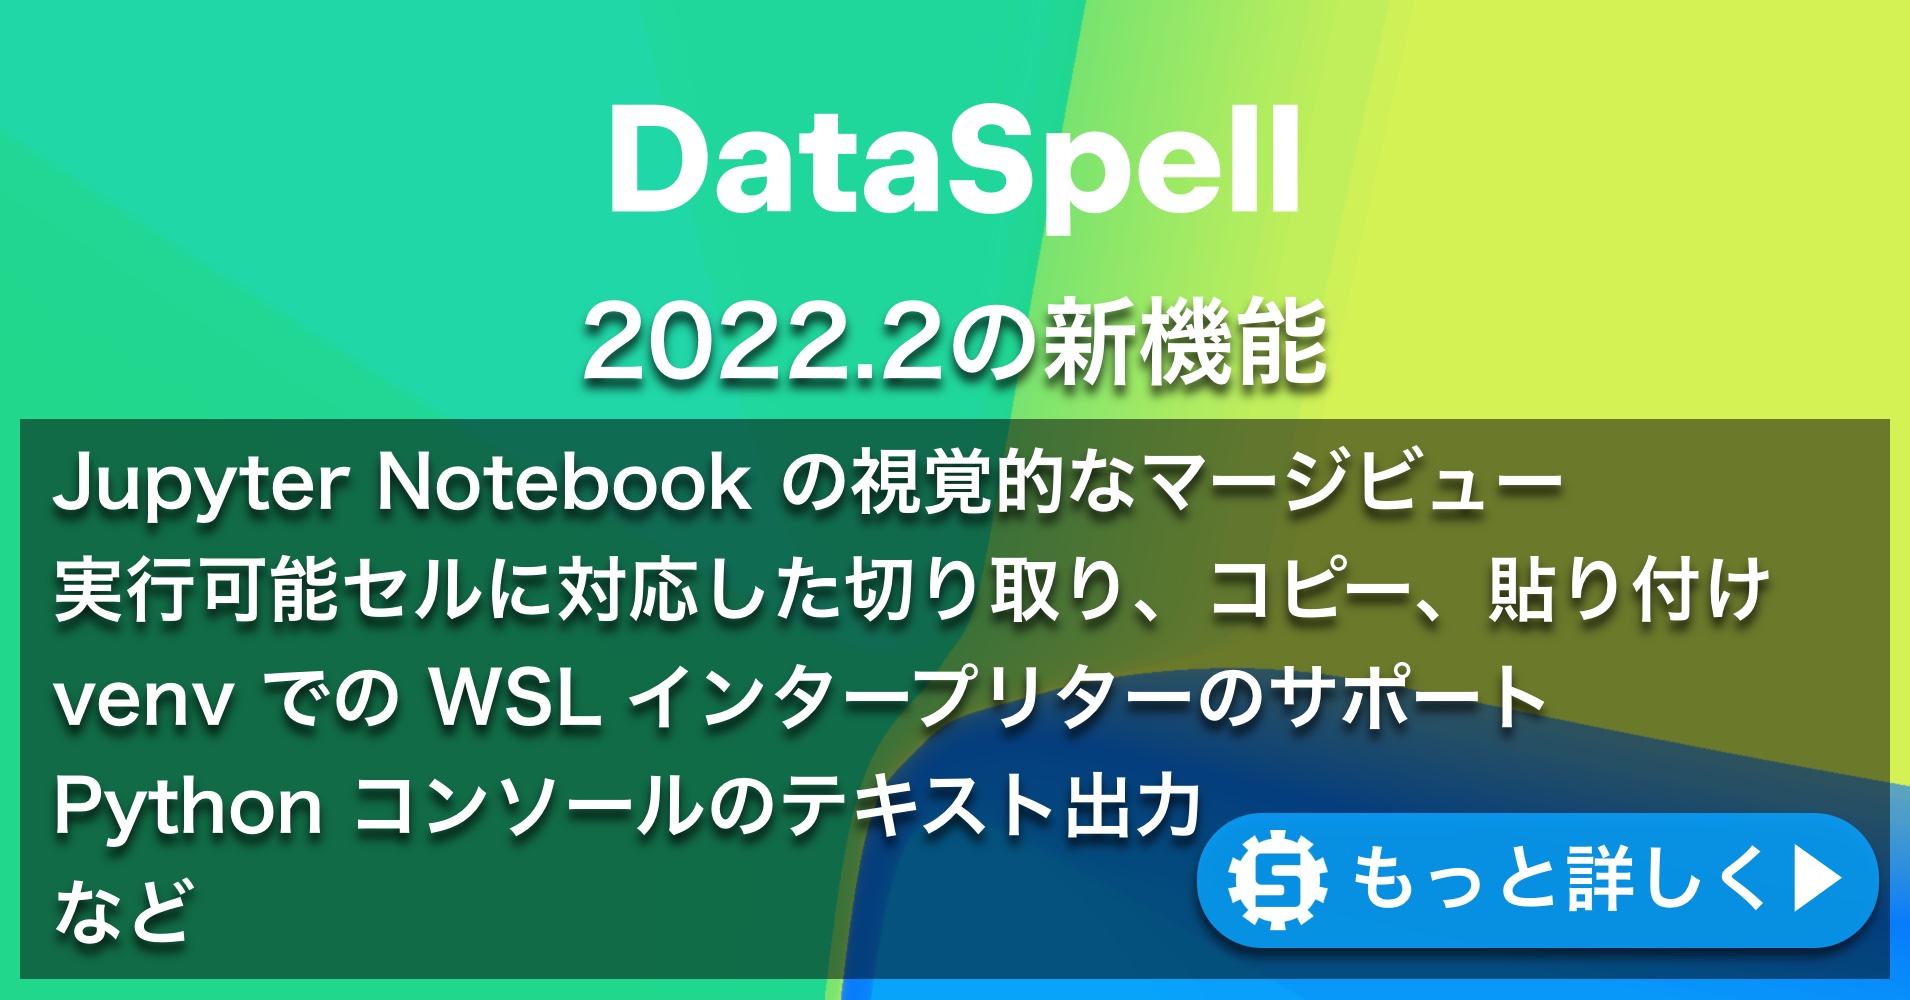 DataSpell 2022.2の新機能